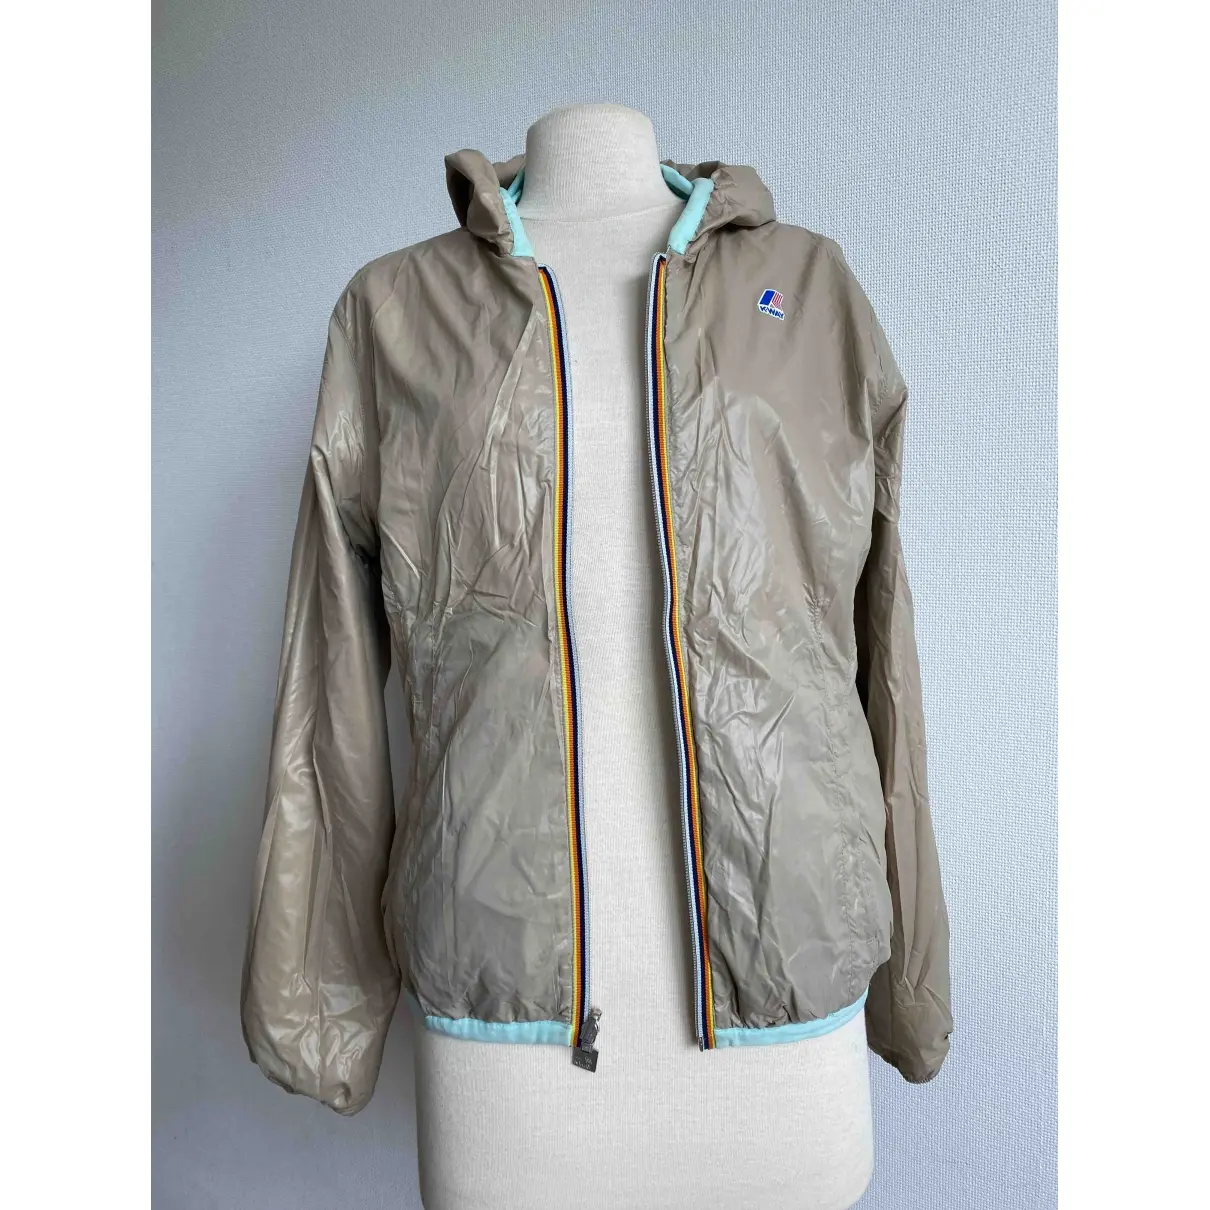 K-Way Jacket for sale